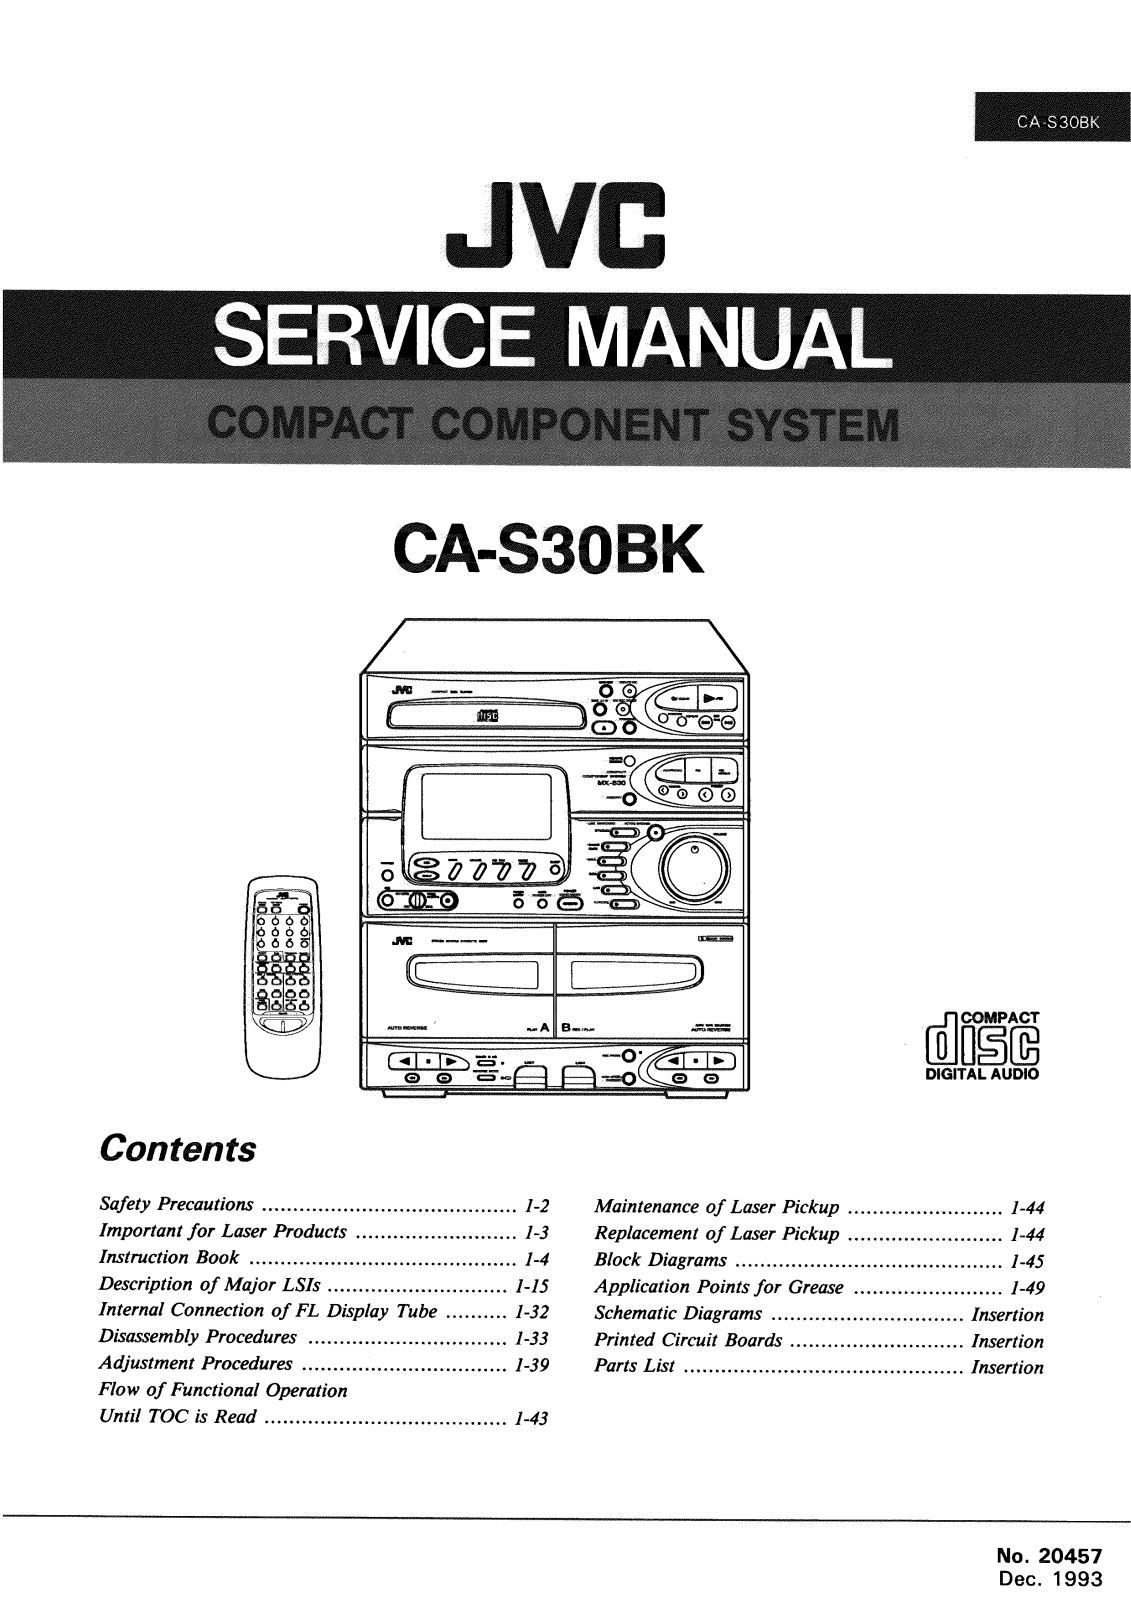 JVC CAS-30-BK Service manual